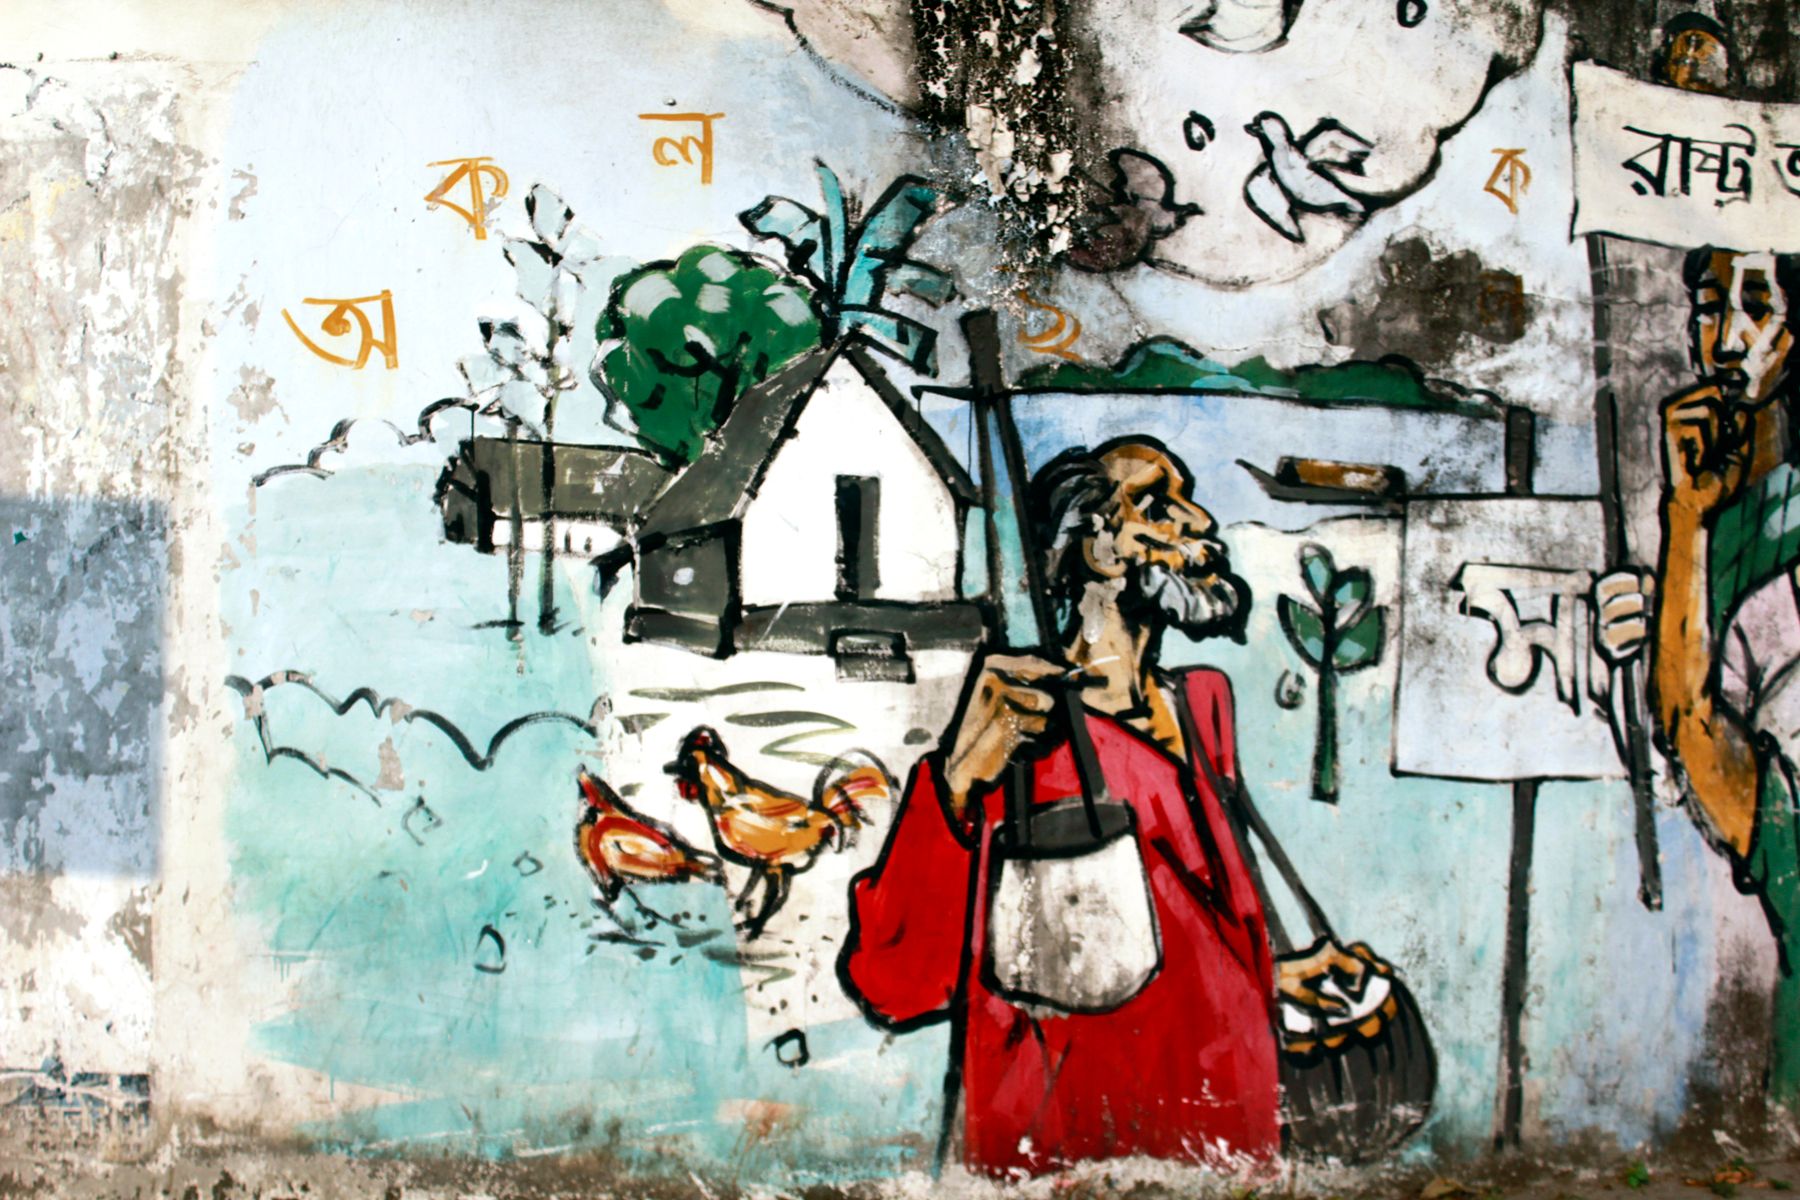 Street Art from the Shahid Minar, University of Dhaka, Bangladesh